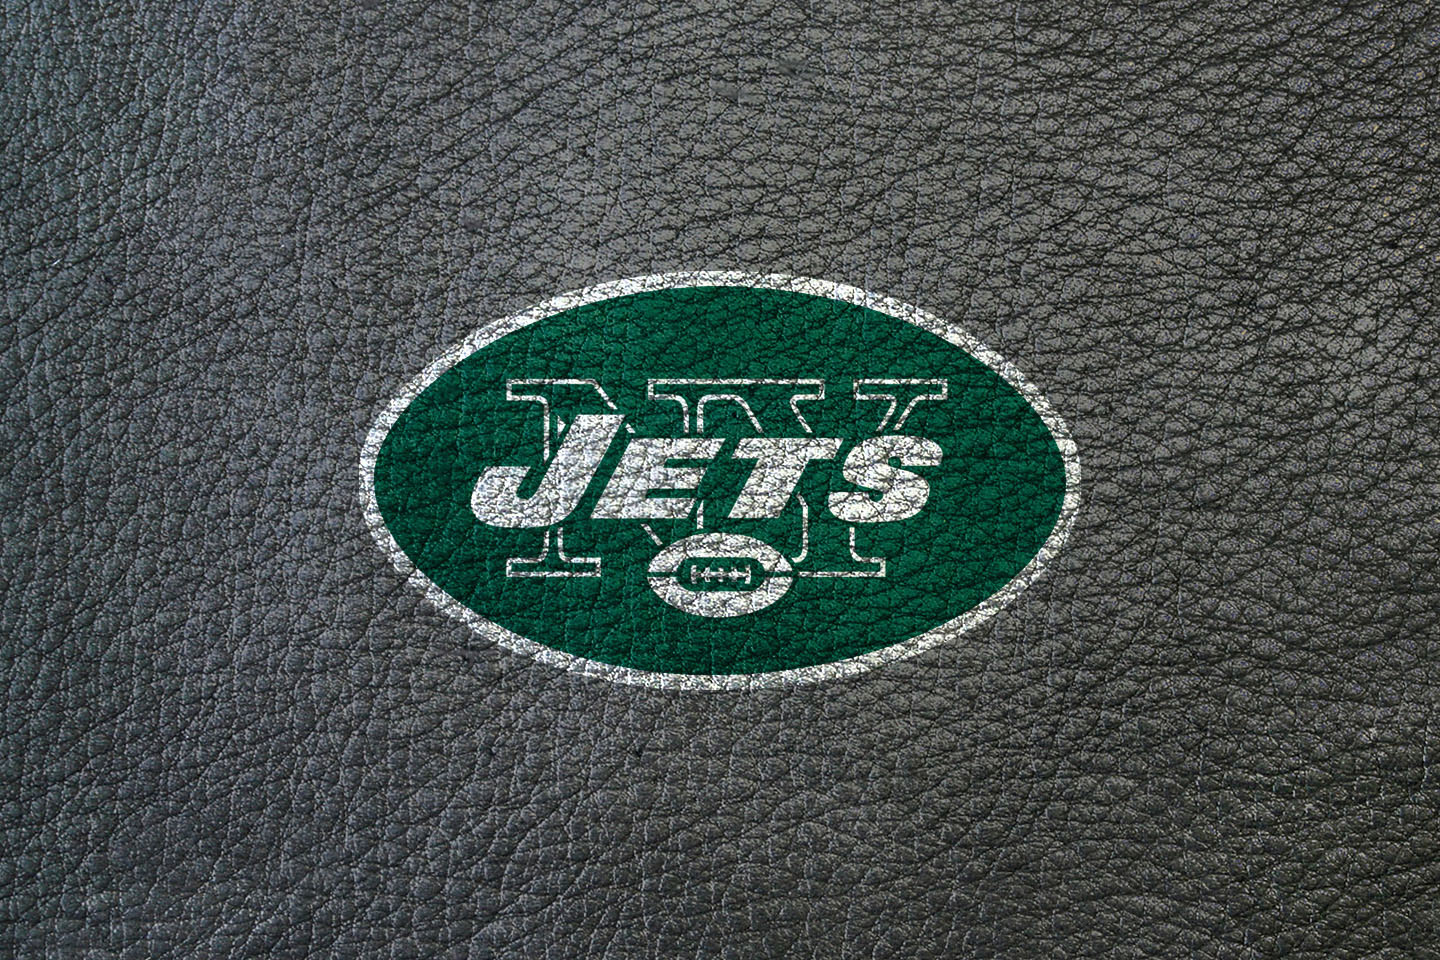 Outstanding New York Jets wallpaper